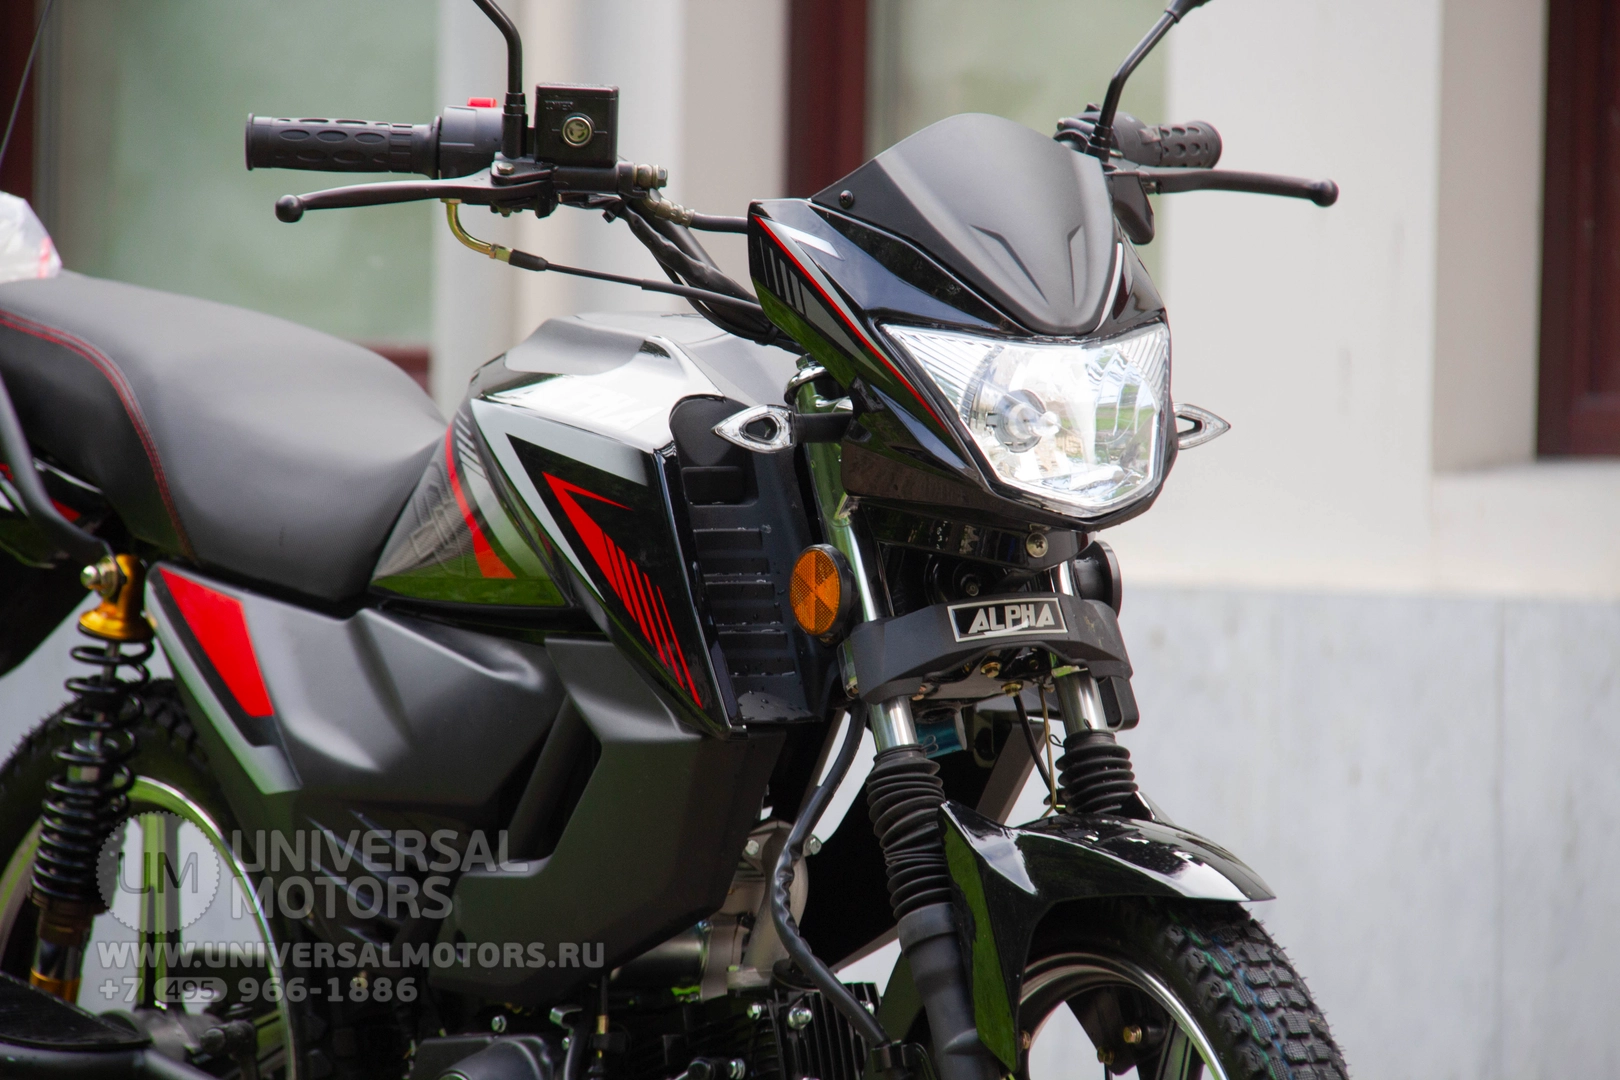 Мотоцикл Universal Alpha СHM 110 (50), 40370288212911131343